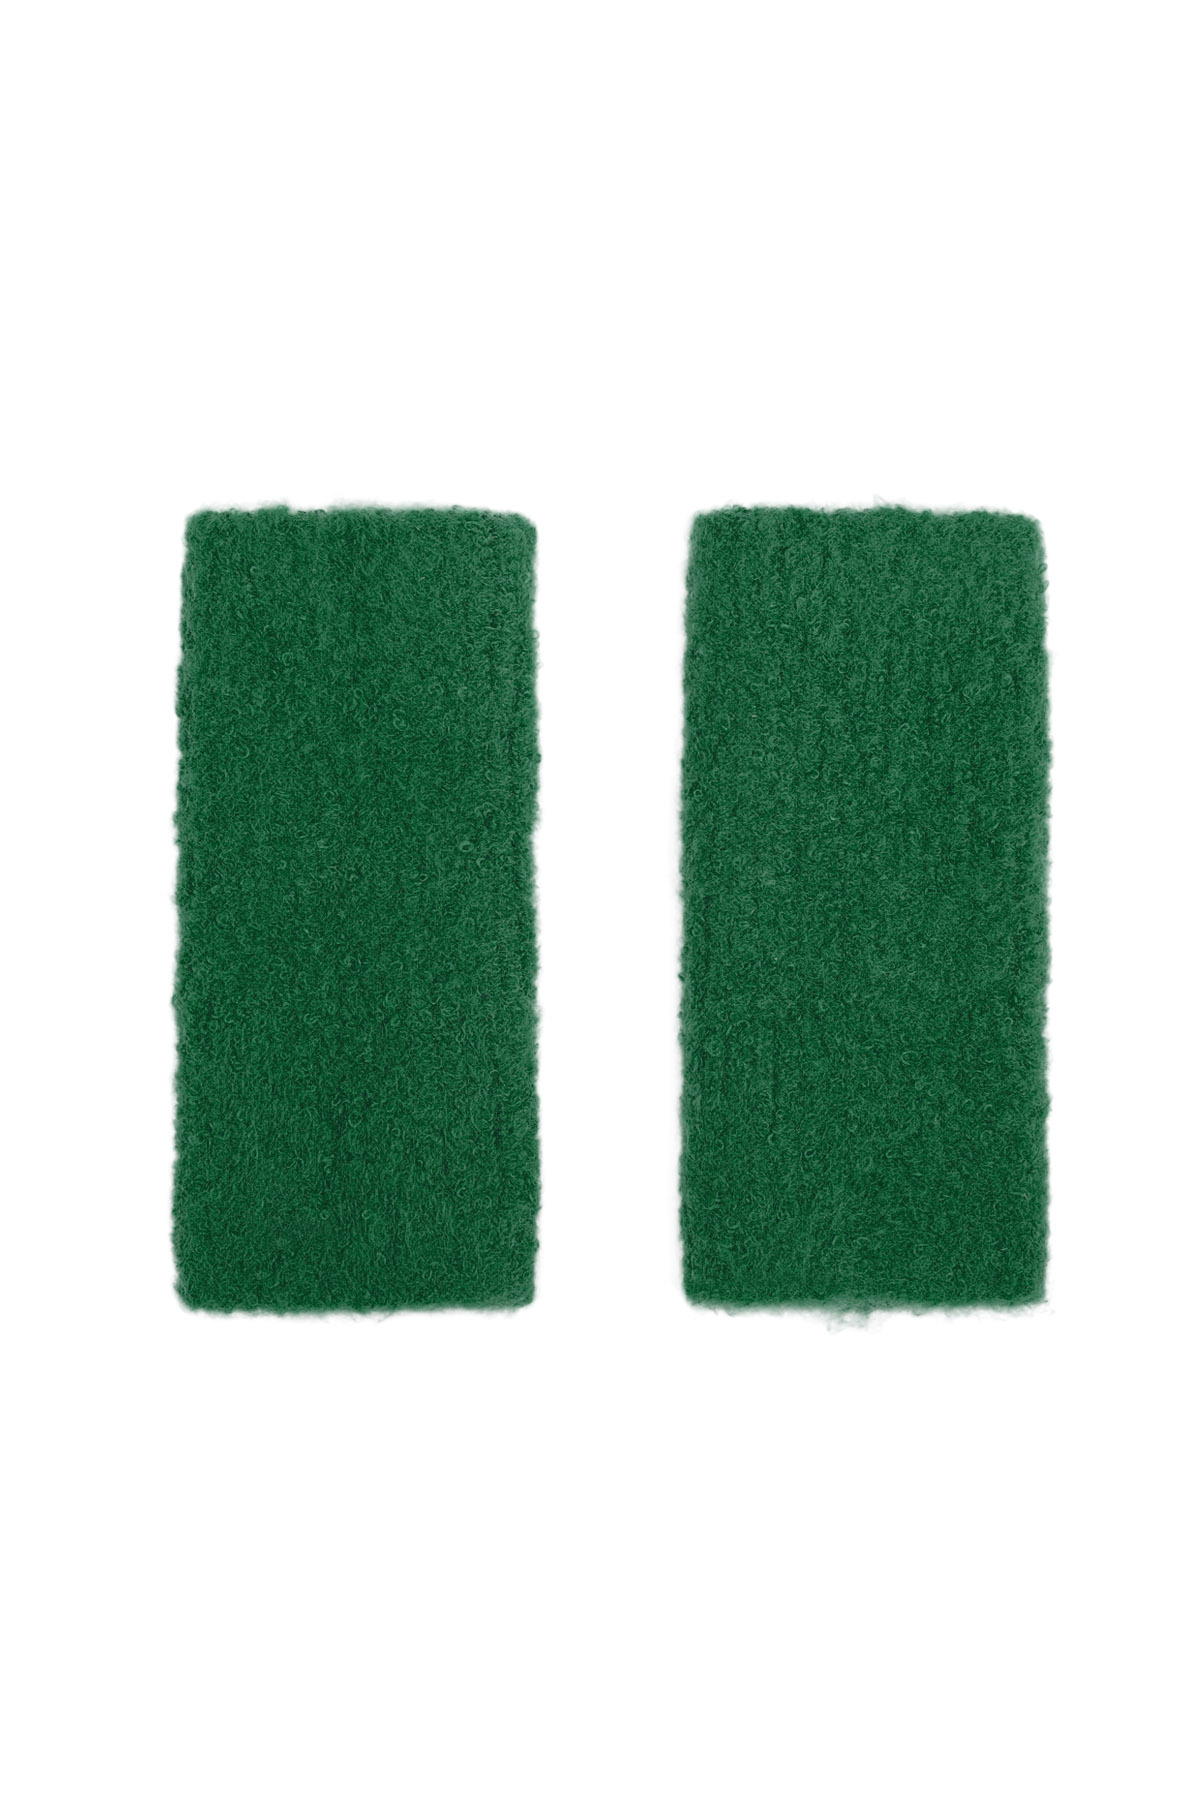 Delikli eldiven - koyu yeşil Resim3